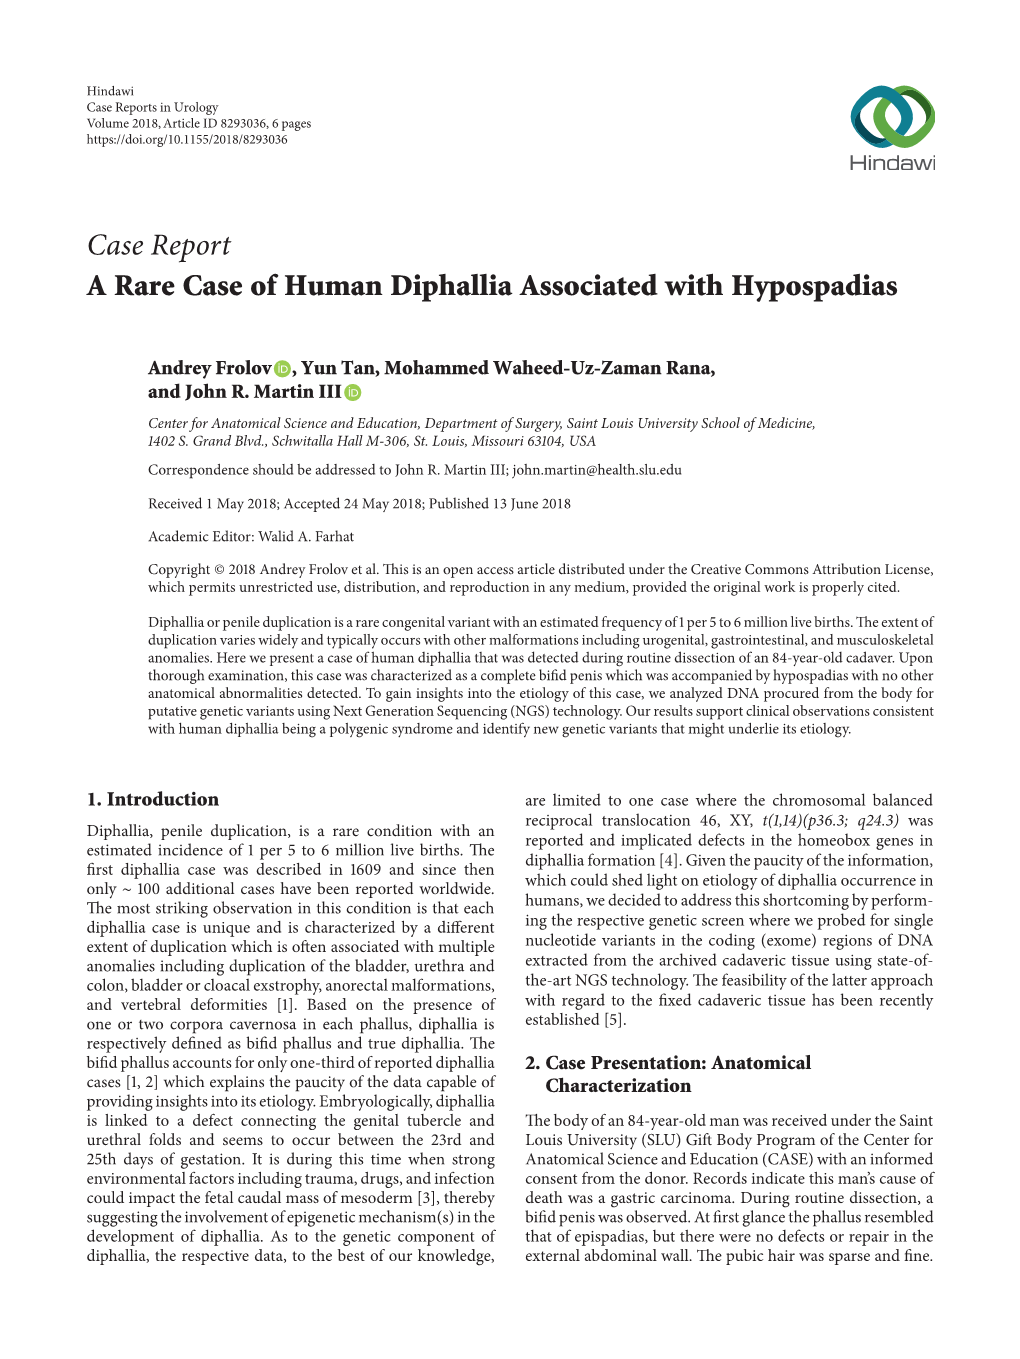 Case Report a Rare Case of Human Diphallia Associated with Hypospadias